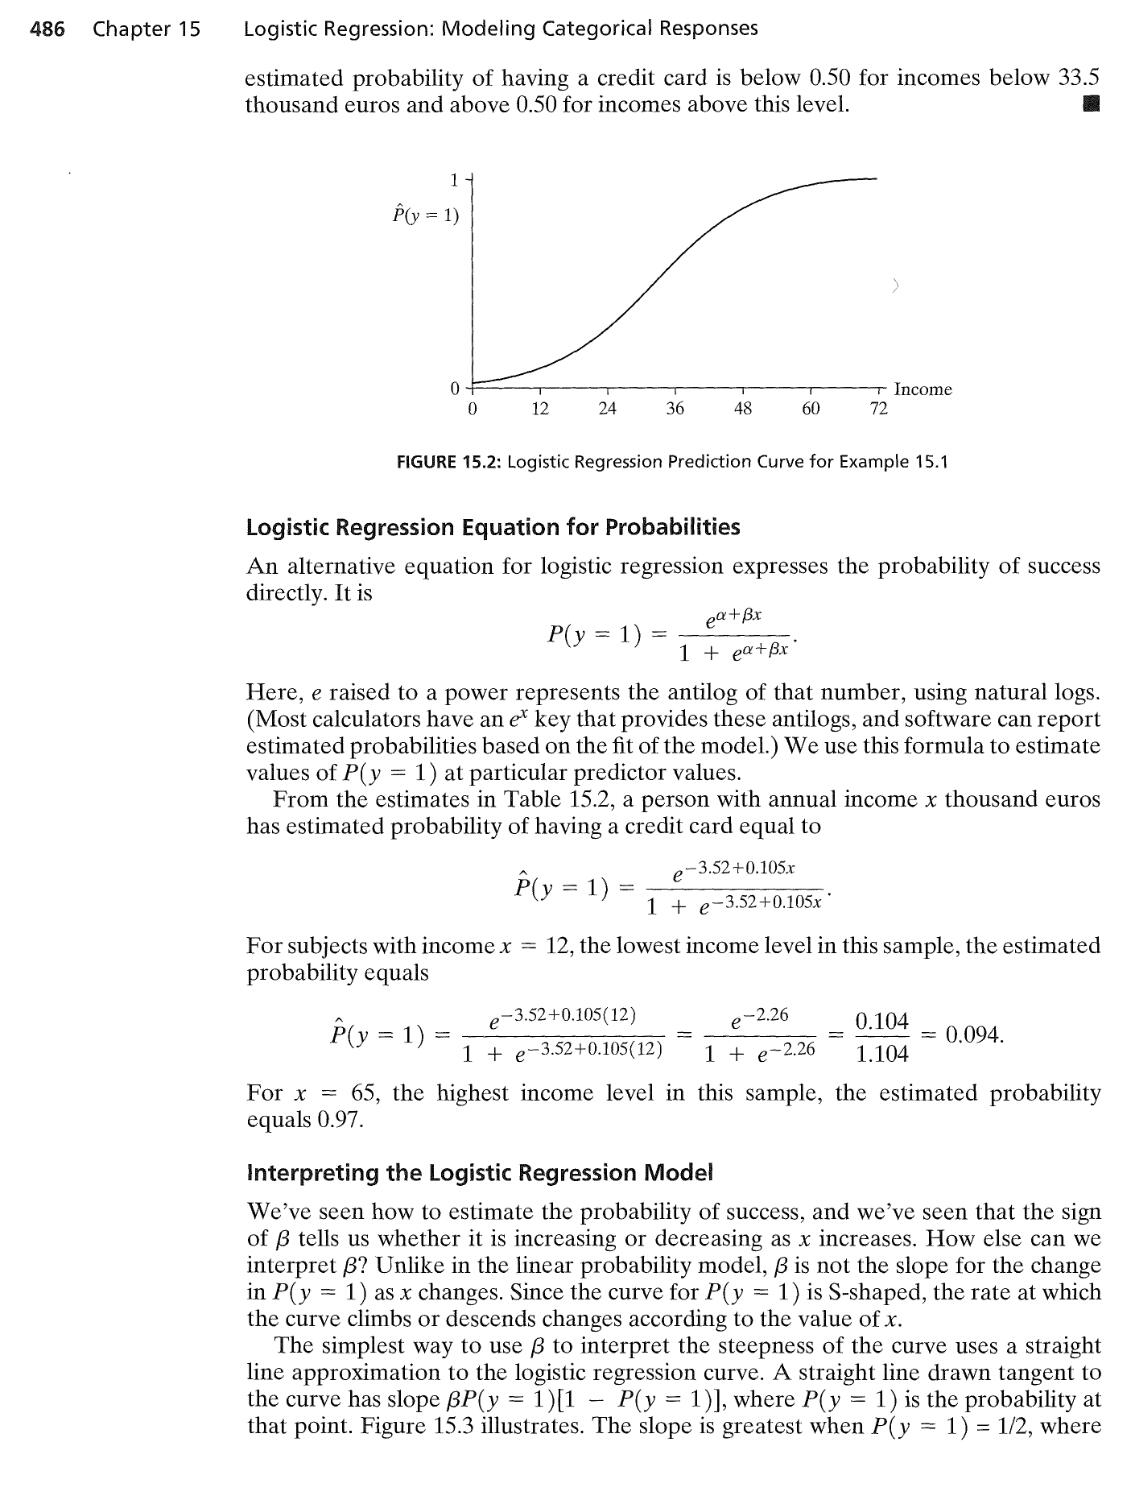 15.6 Loglinear Models for Categorical Variables*